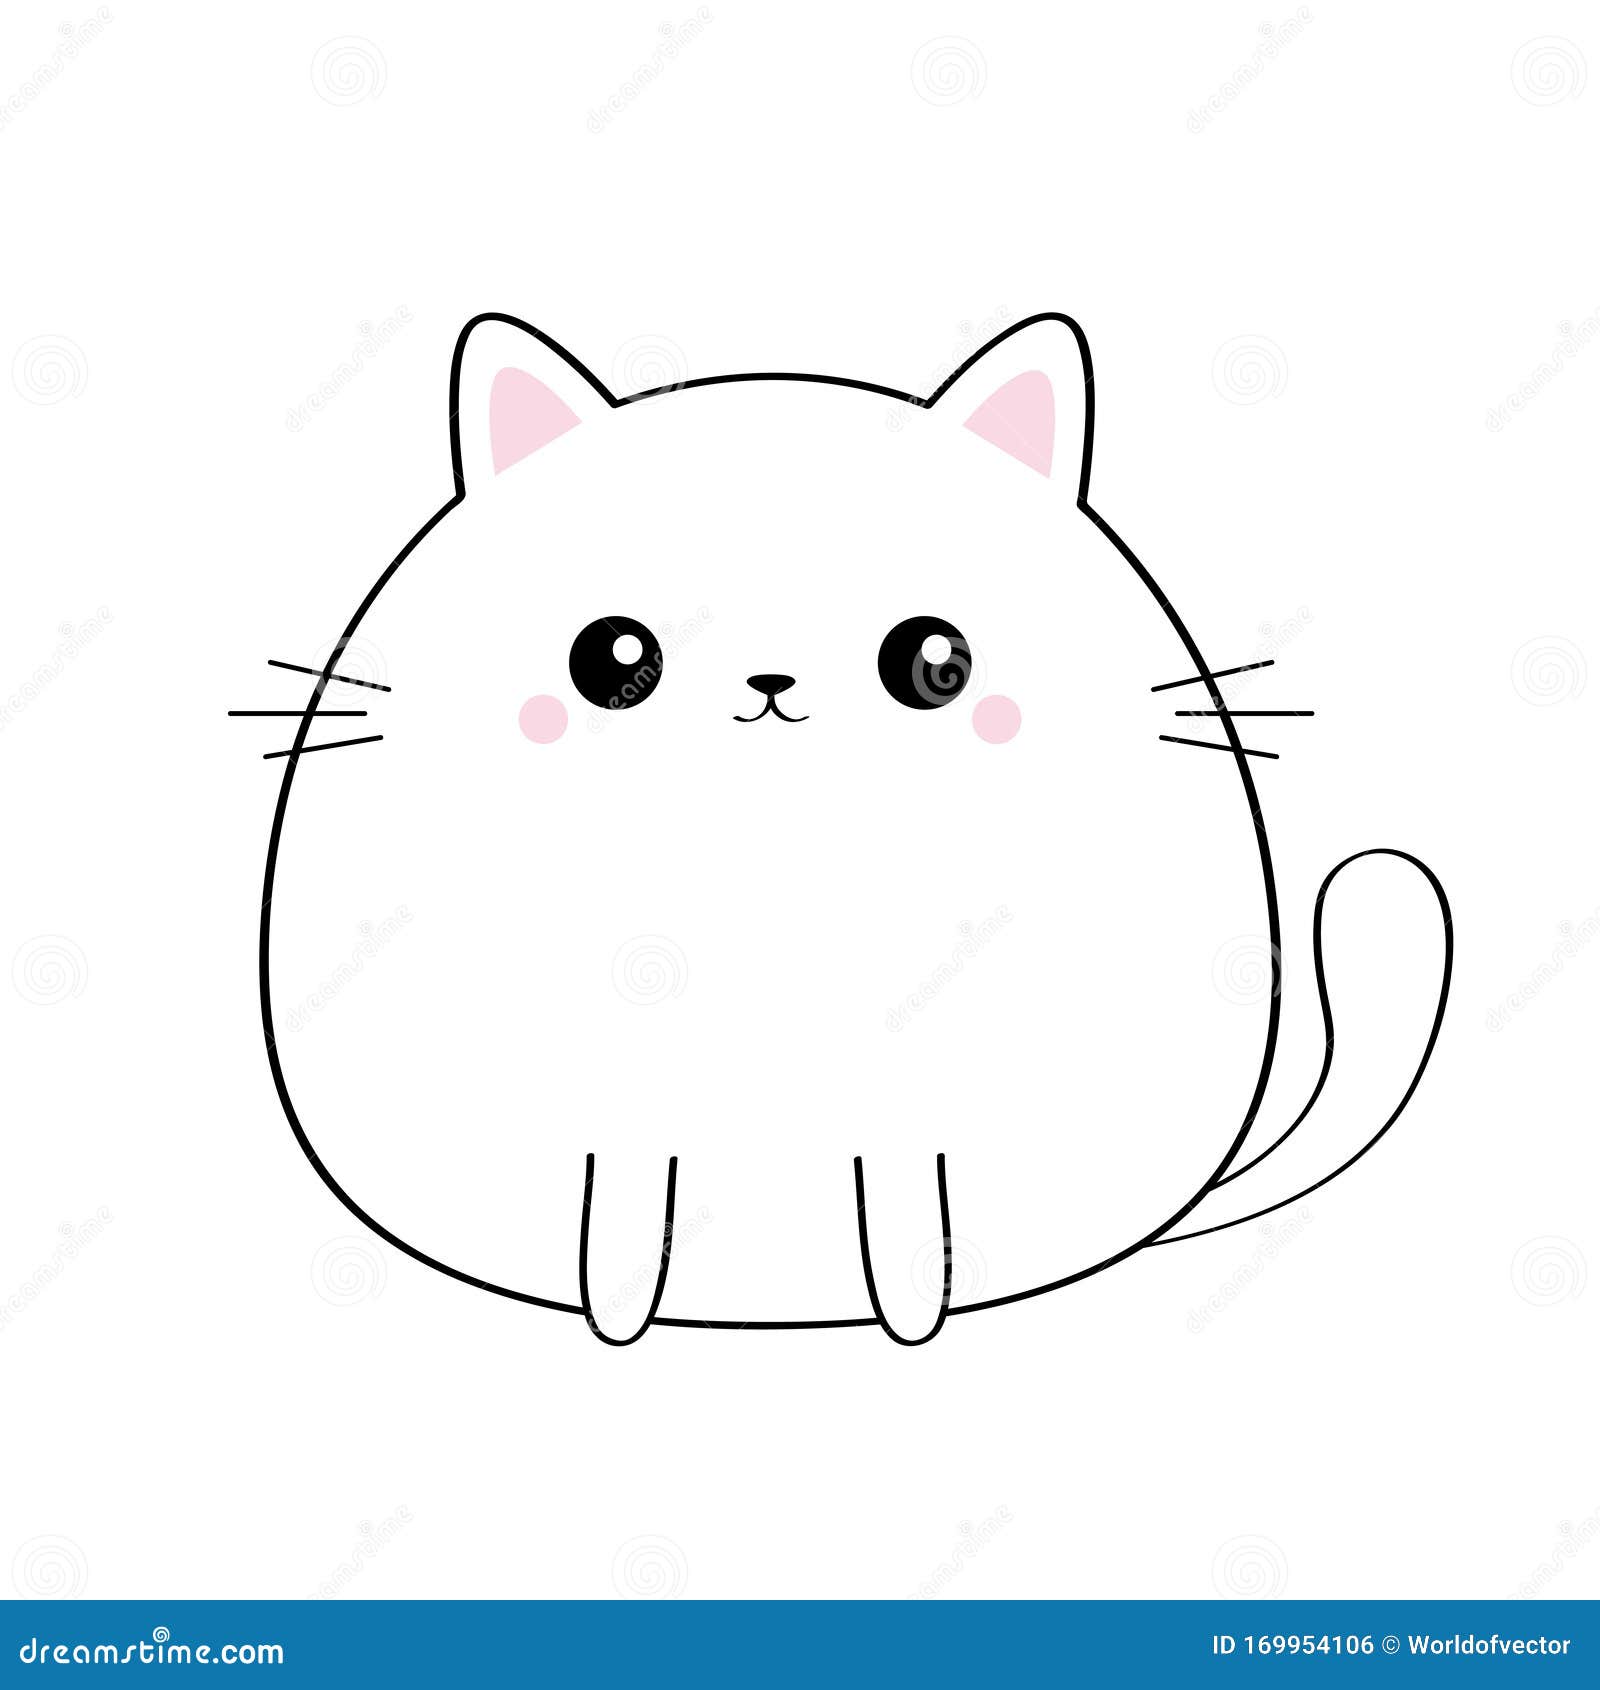 Cute sitting cat icon. Funny cartoon character. Kawaii animal